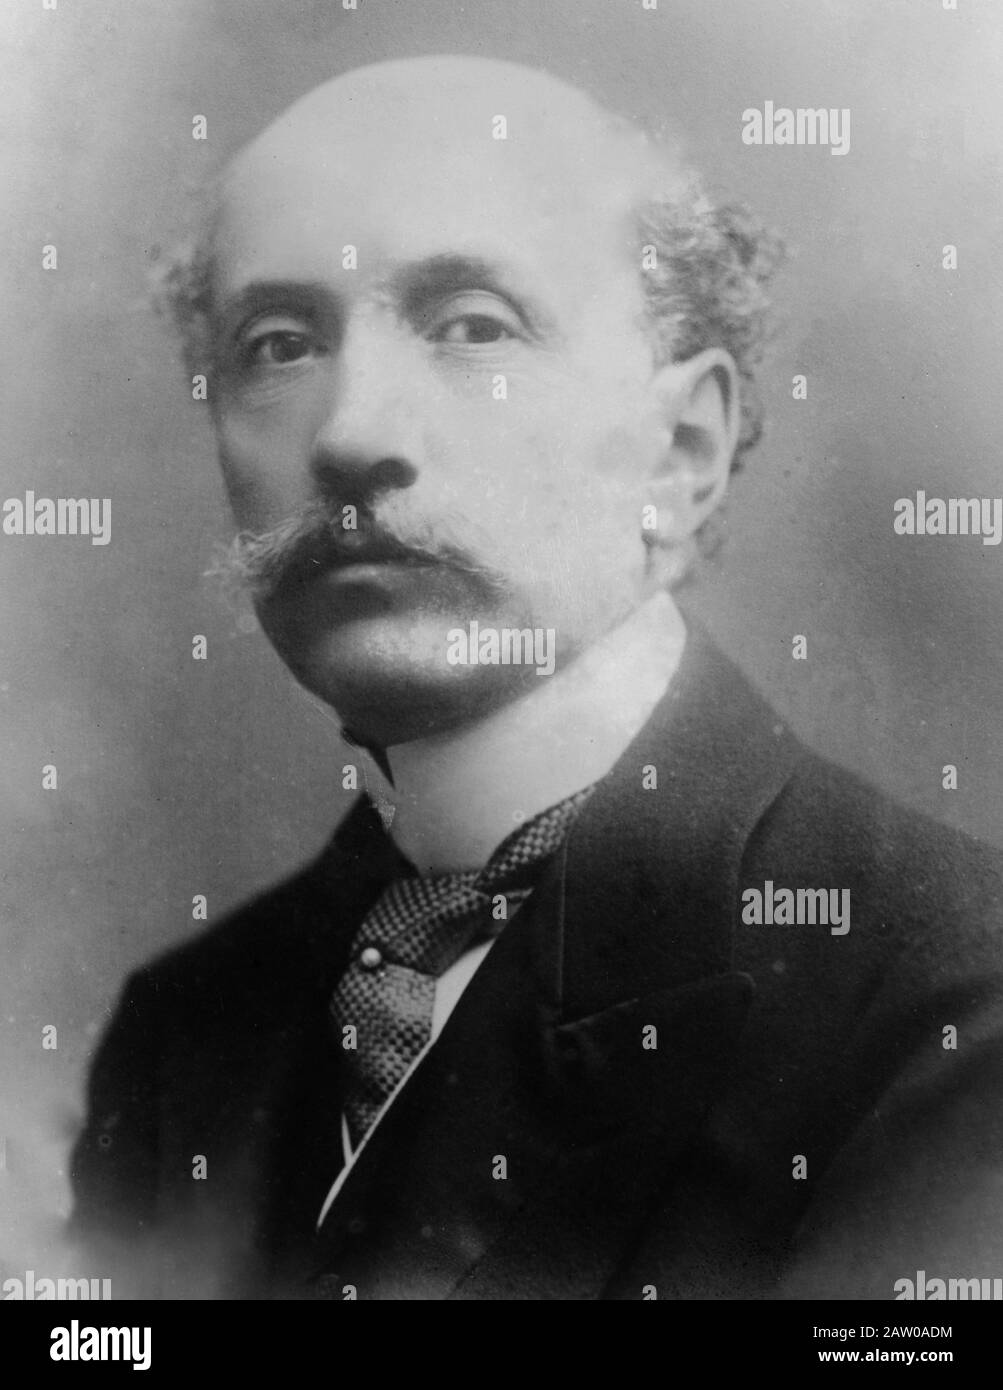 Primer Ministro español Eduardo dato e irradier ca. 1910-1915 Foto de stock